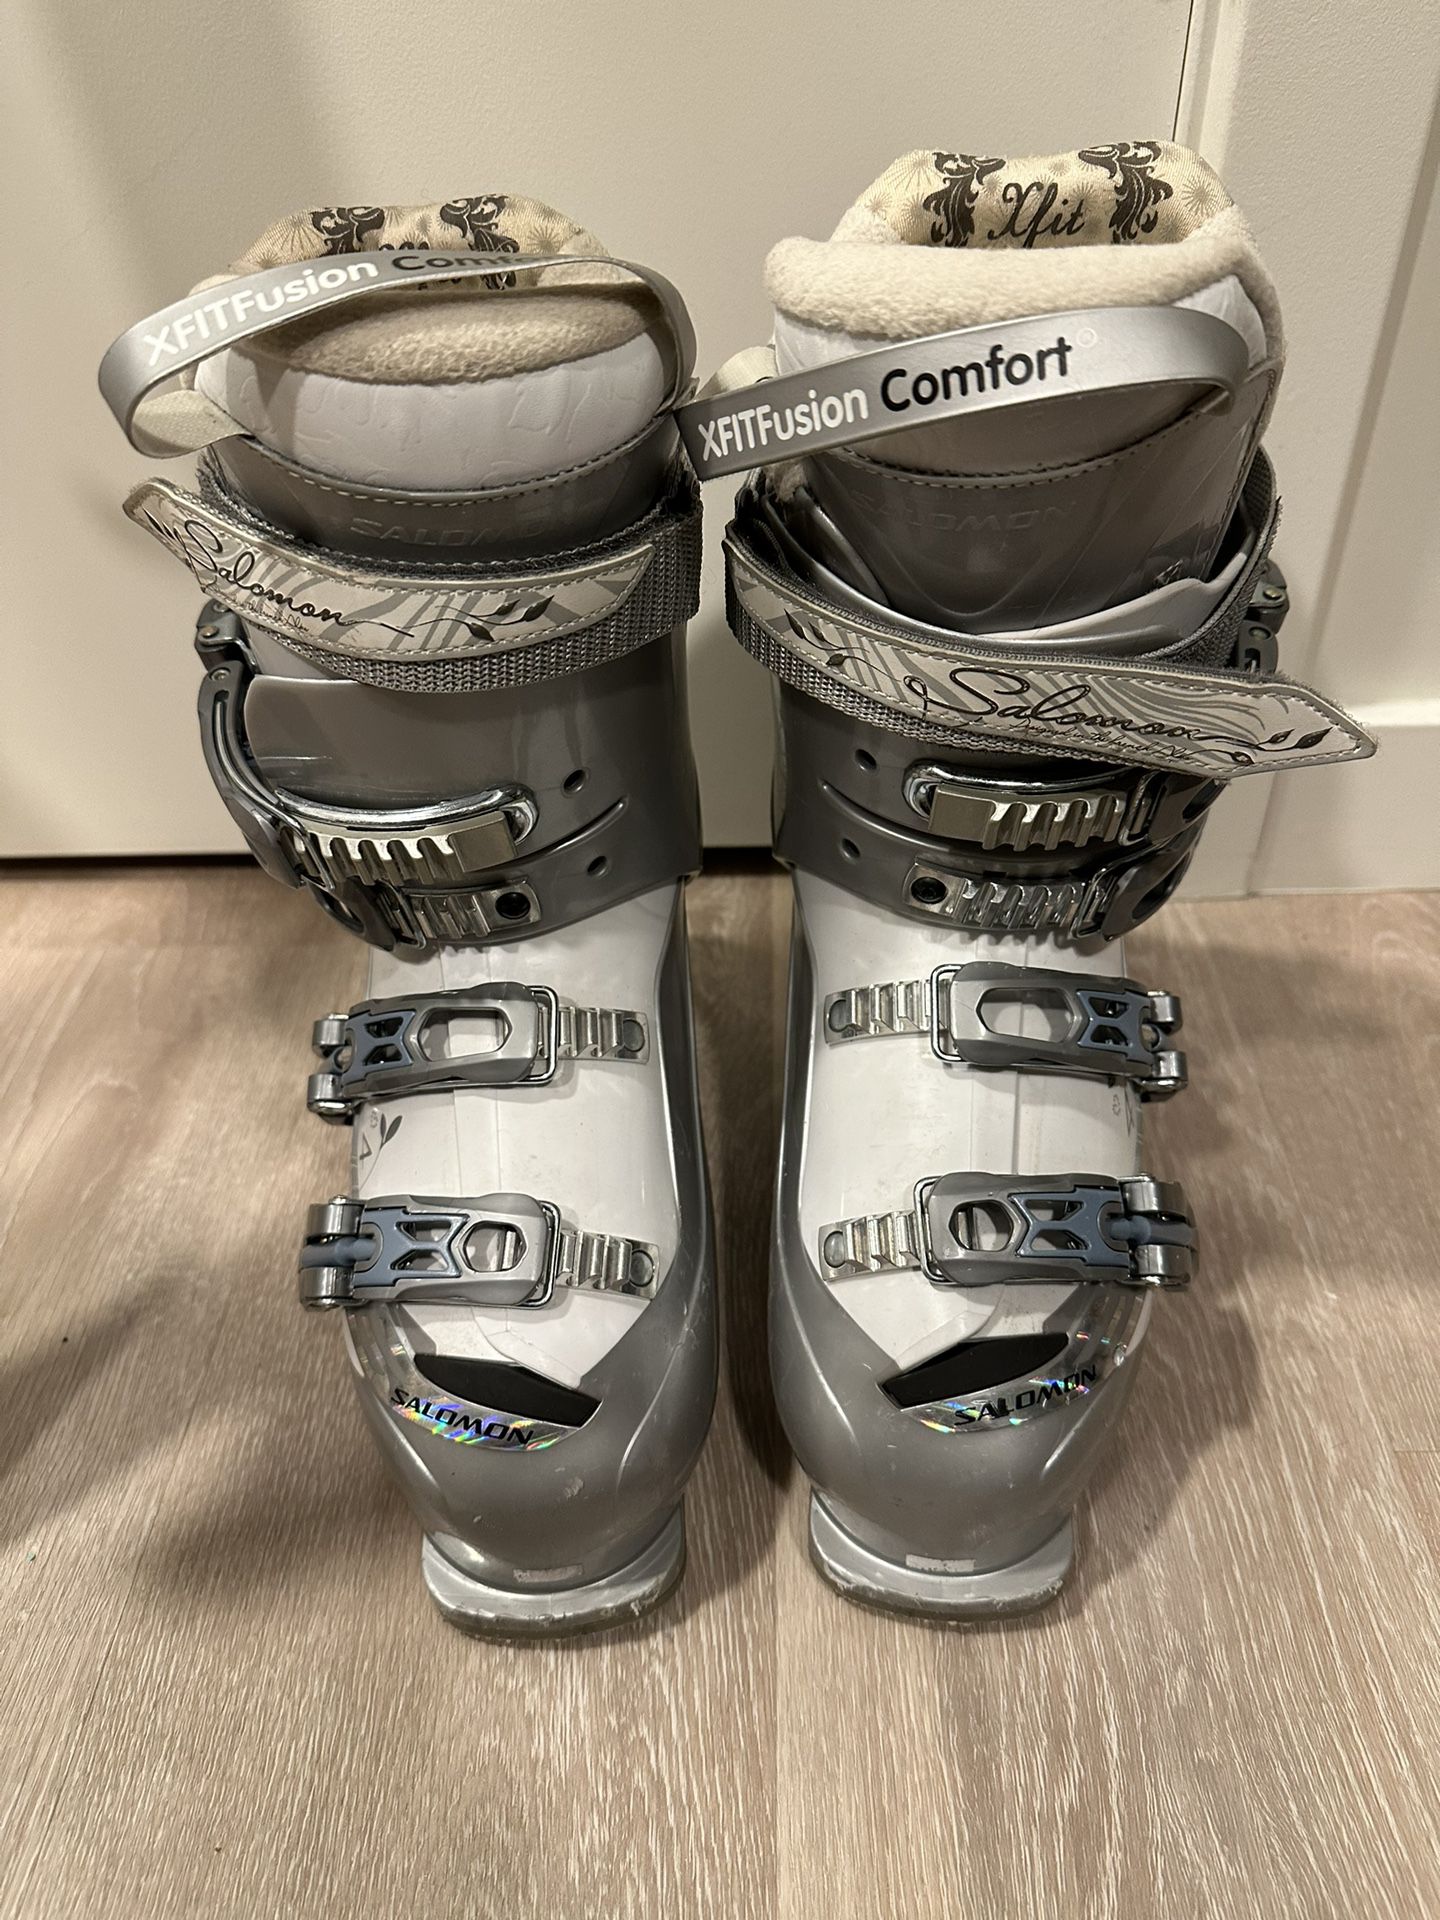 Salomon Ski boots women’s Size 6